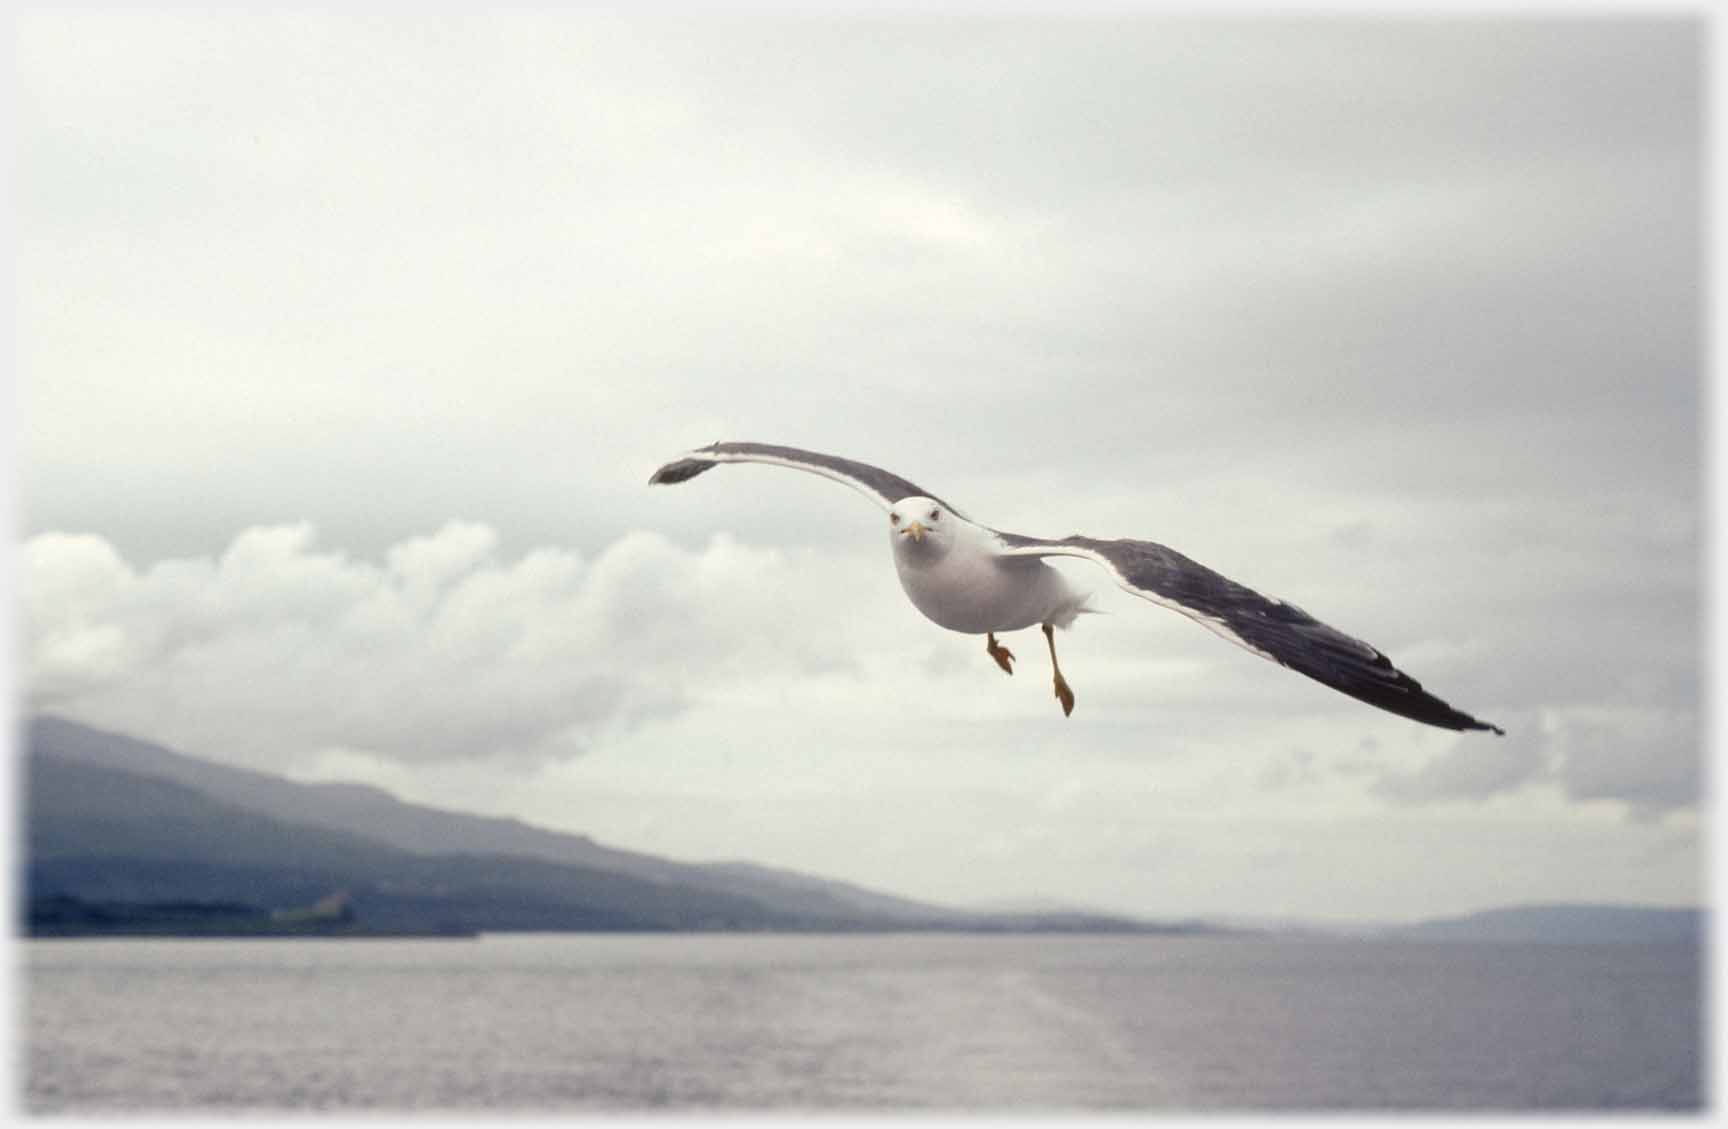 Blackbacked gull hovering over sea.